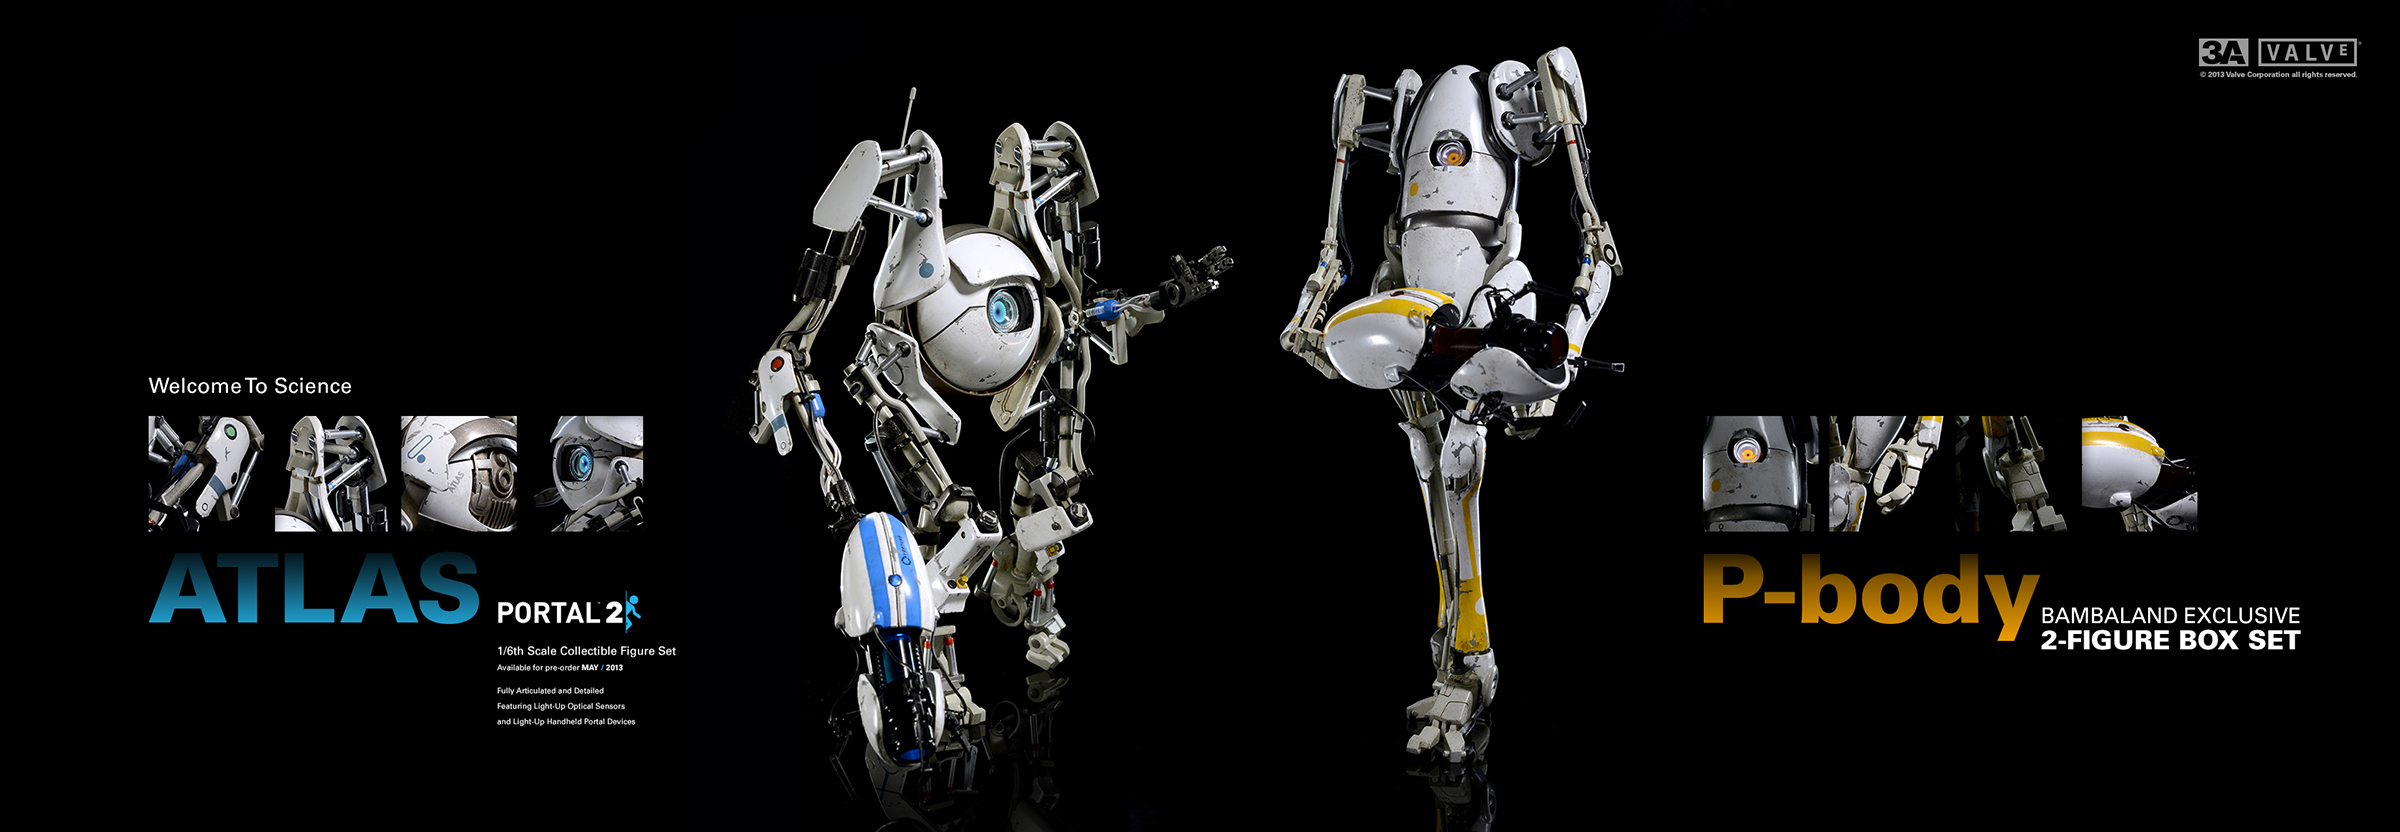 New body 2 2. Portal 2 Atlas and p-body. Portal 2 атлас и Пибоди. Фигурок Atlas и p-body (Portal 2). Портал 2 p-body и Atlas.